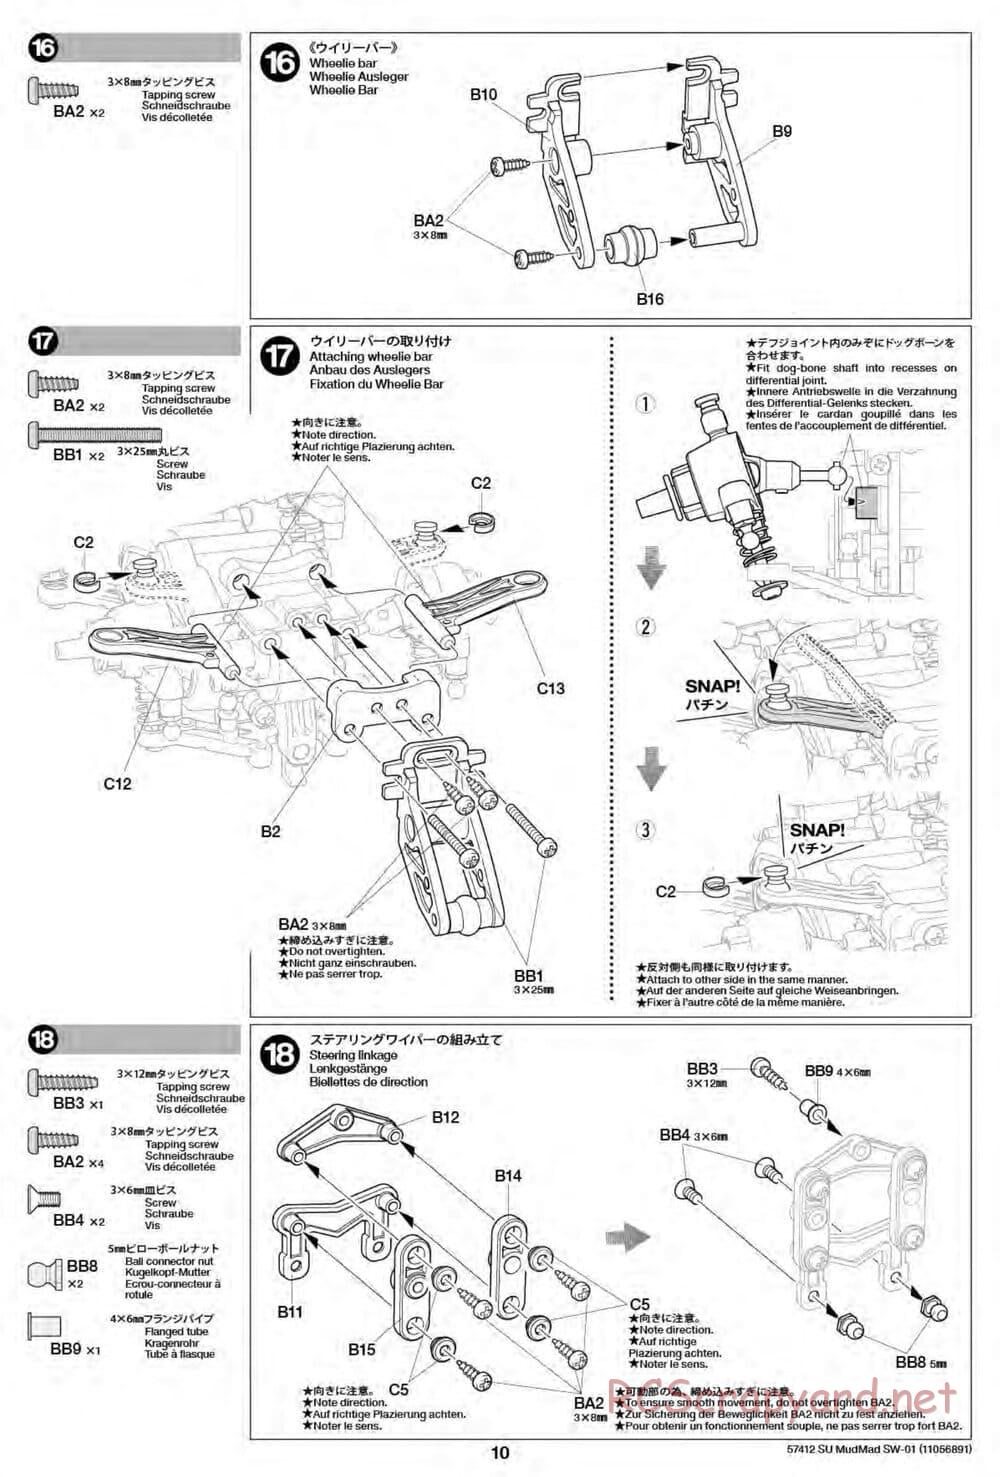 Tamiya - MudMad - SW-01 Chassis - Manual - Page 10